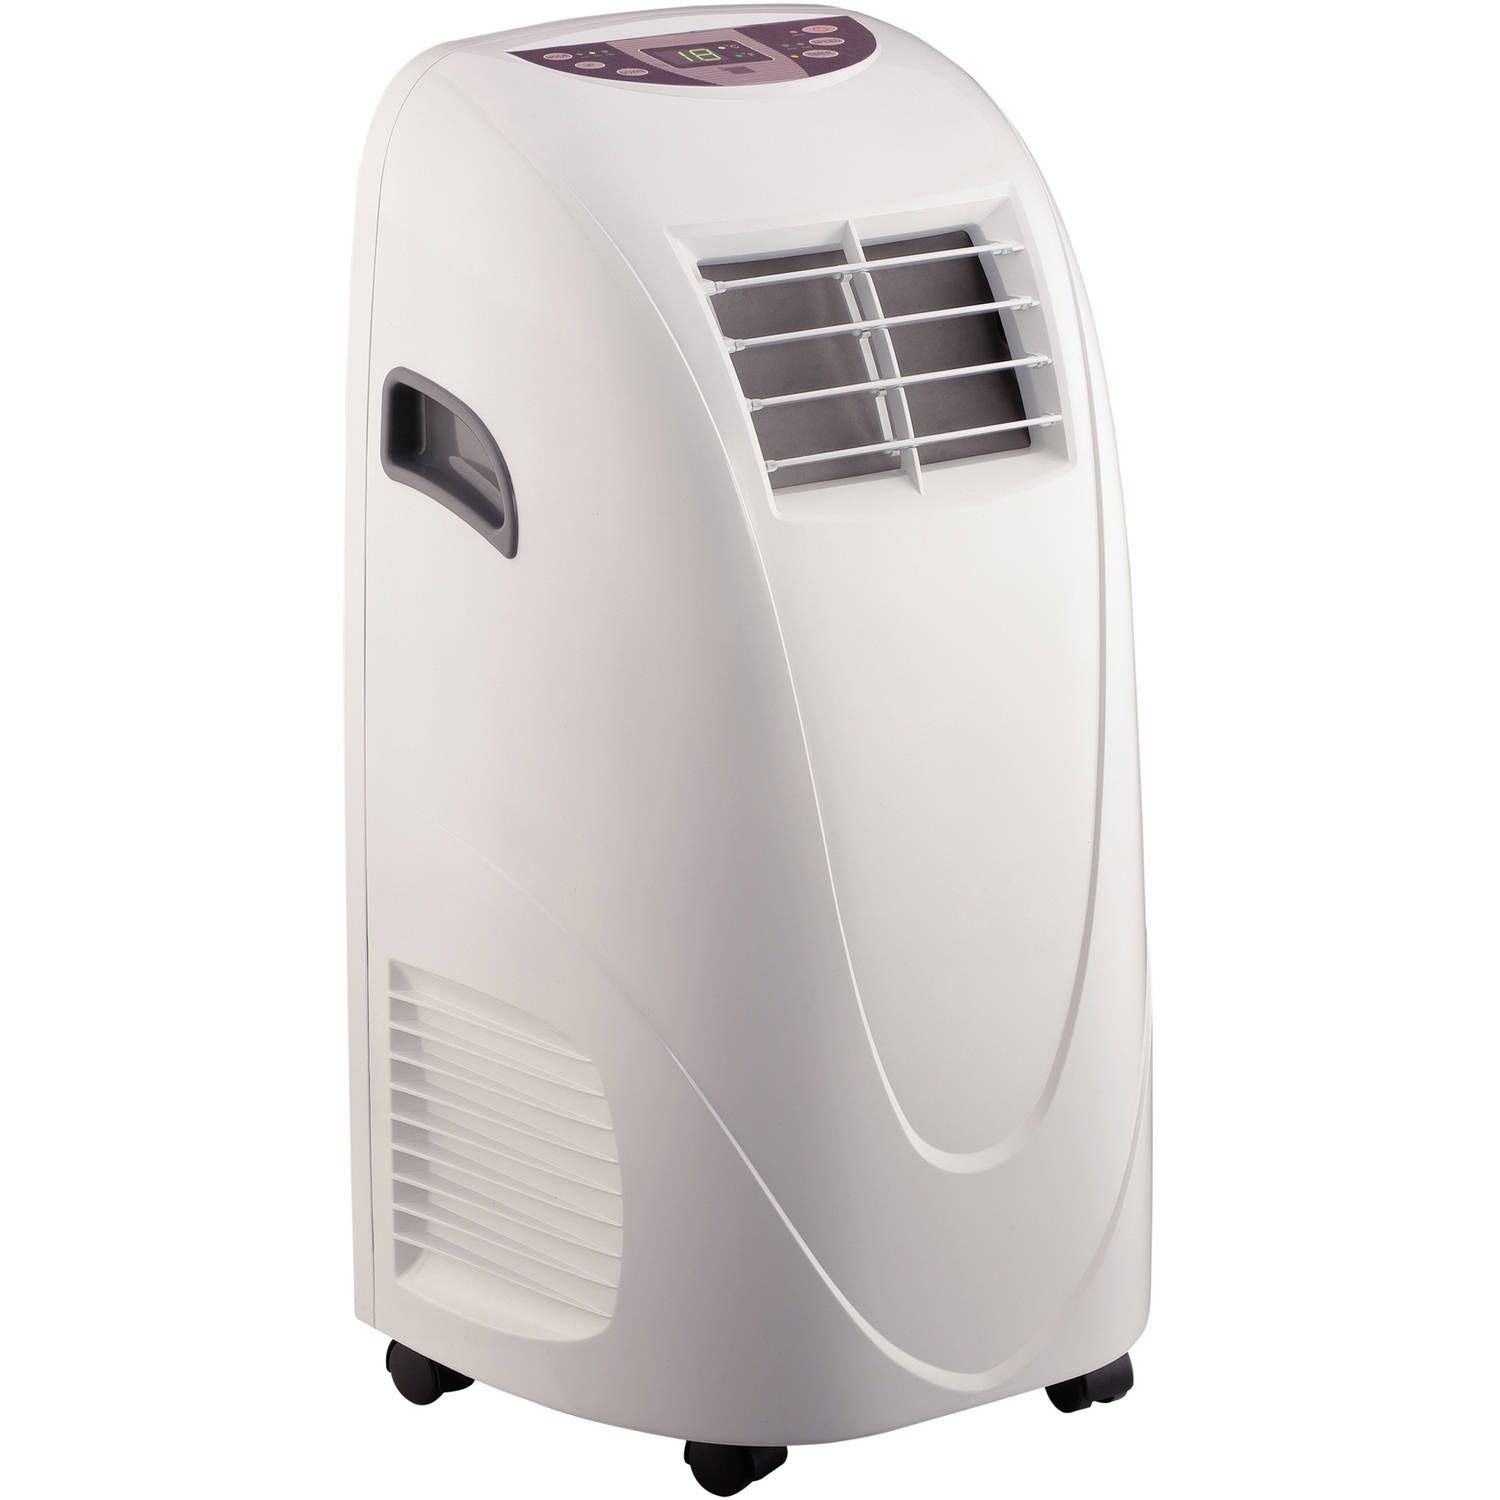 Brand new CCH 10,000 BTU portable air conditioner